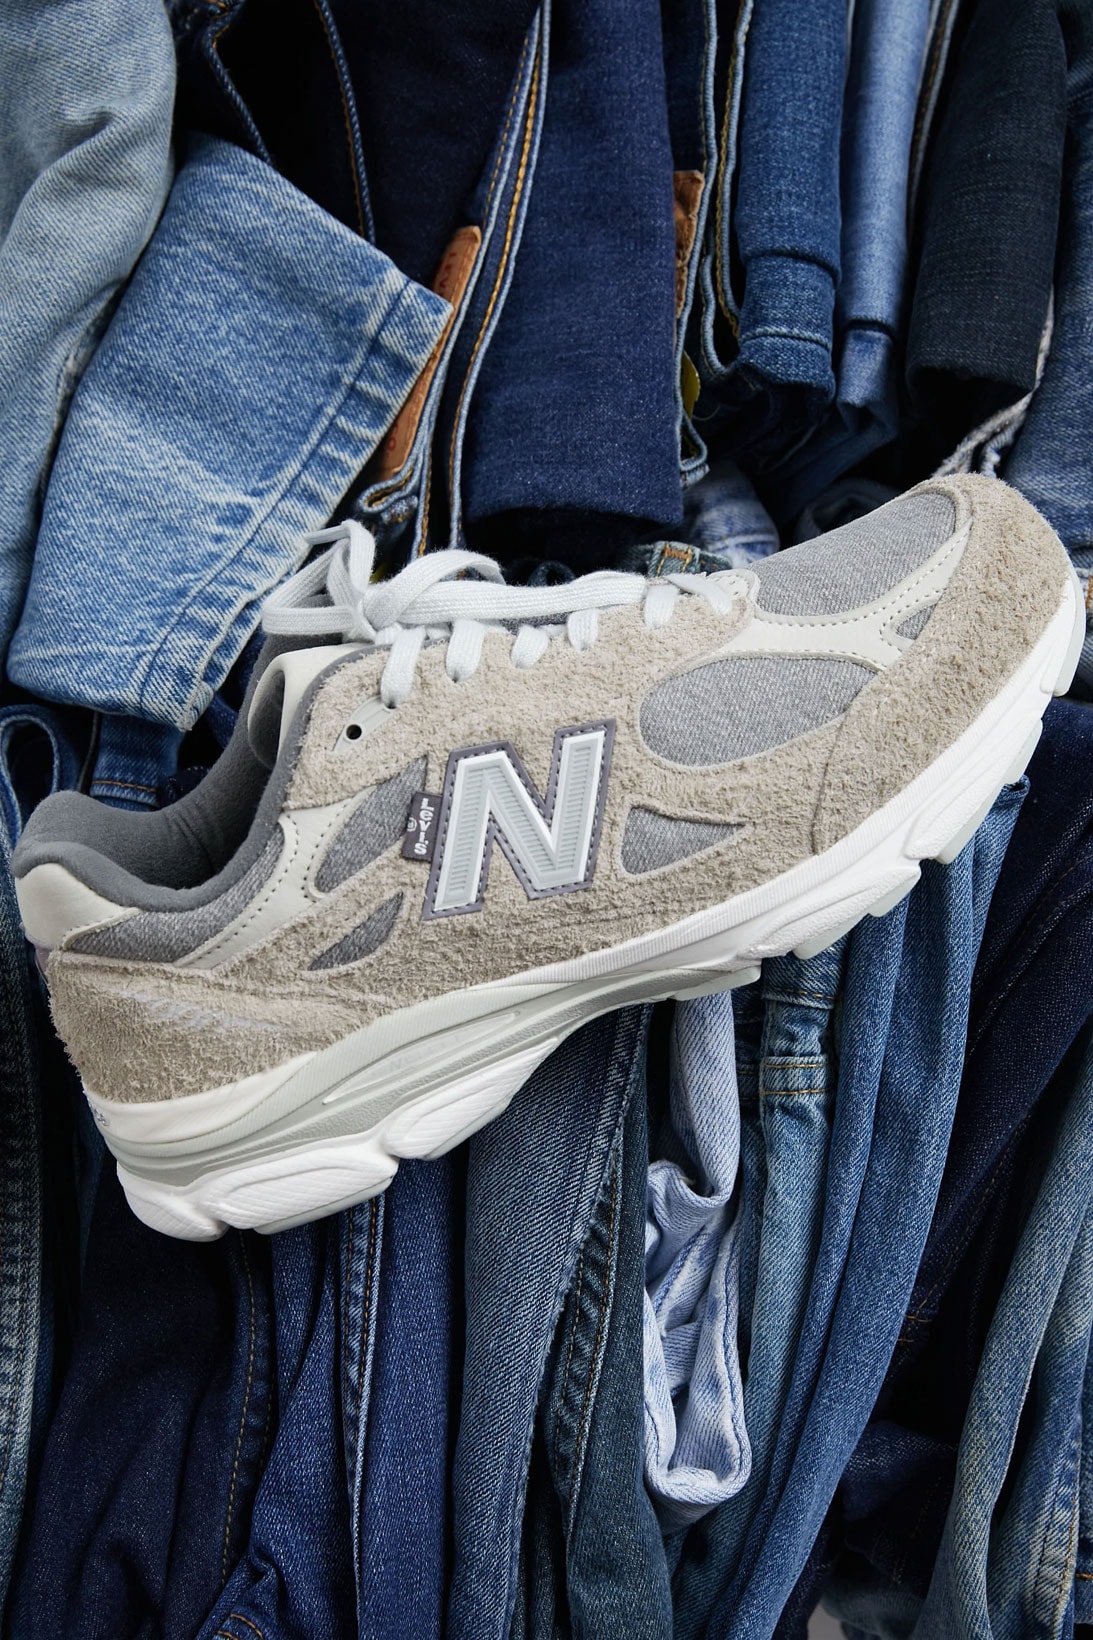 Levi's New Balance NB 990v3 Collaboration Denim Gray Jeans